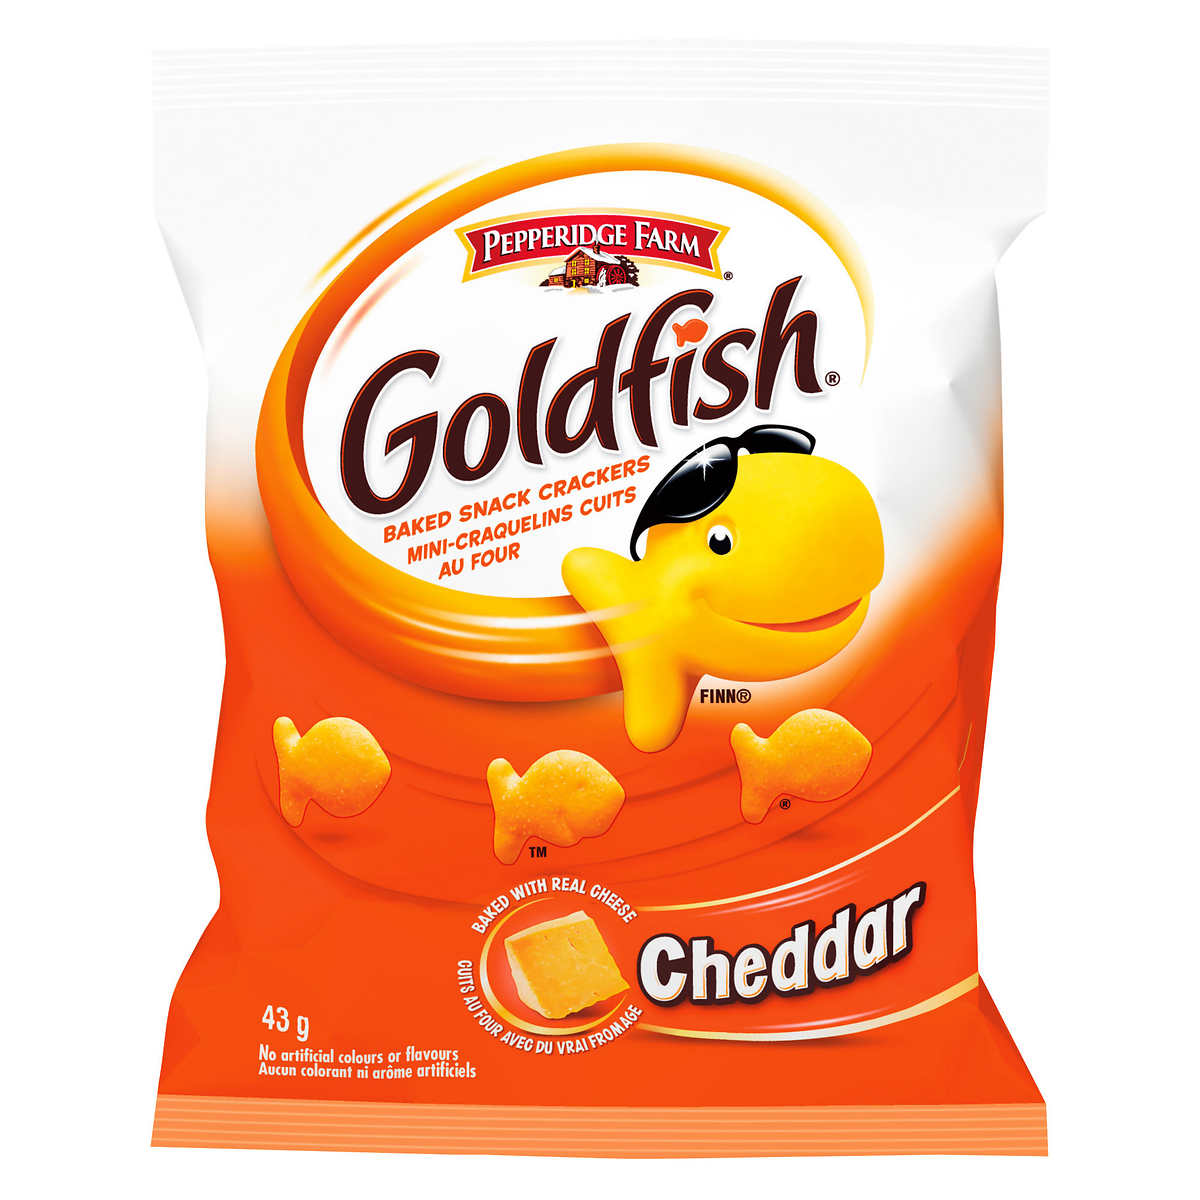 Goldfish Baked Snack Cheddar Crackers, 24 × 43 g (1.5 oz.)